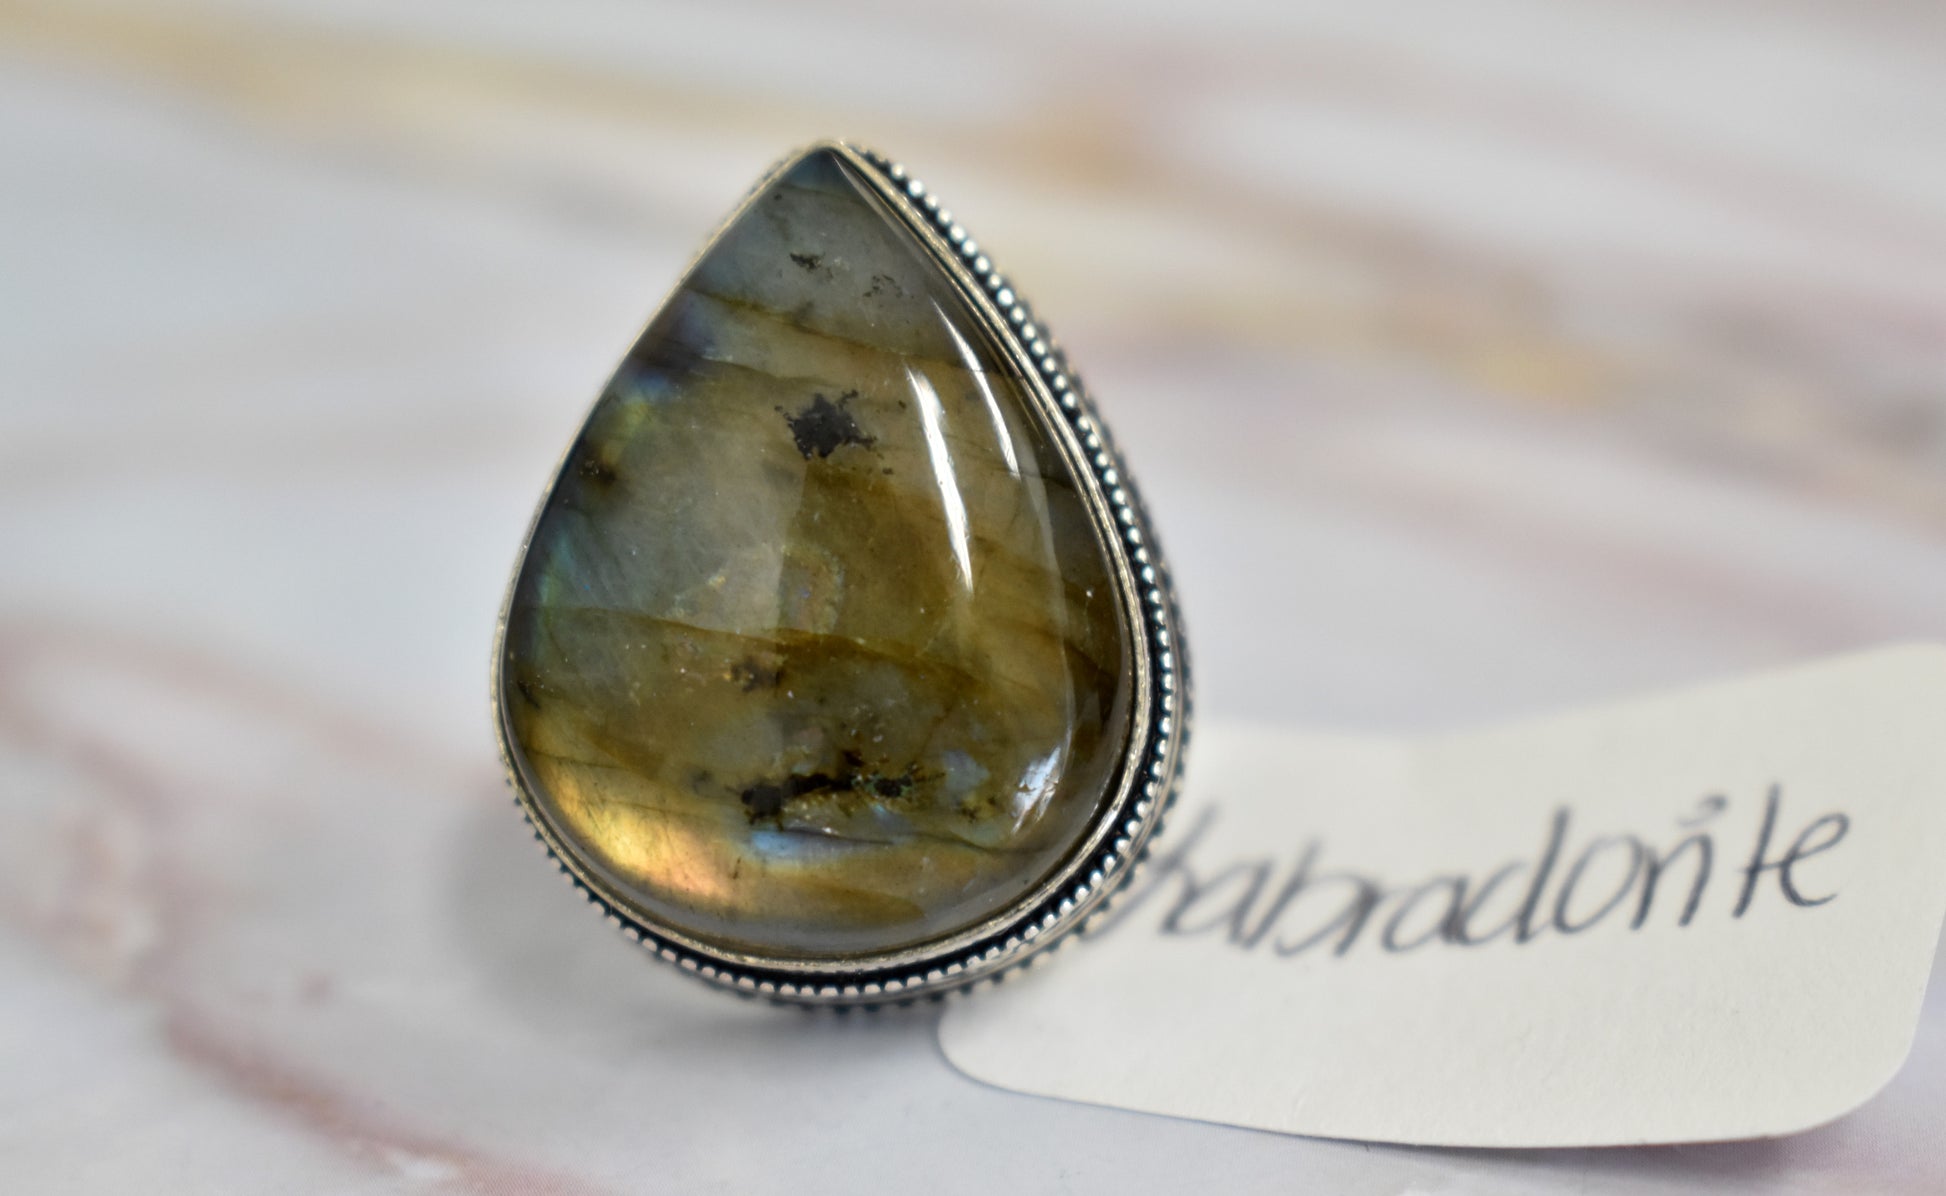 stones-of-transformation - Labradorite Ring (Size 8.5) - Stones of Transformation - 